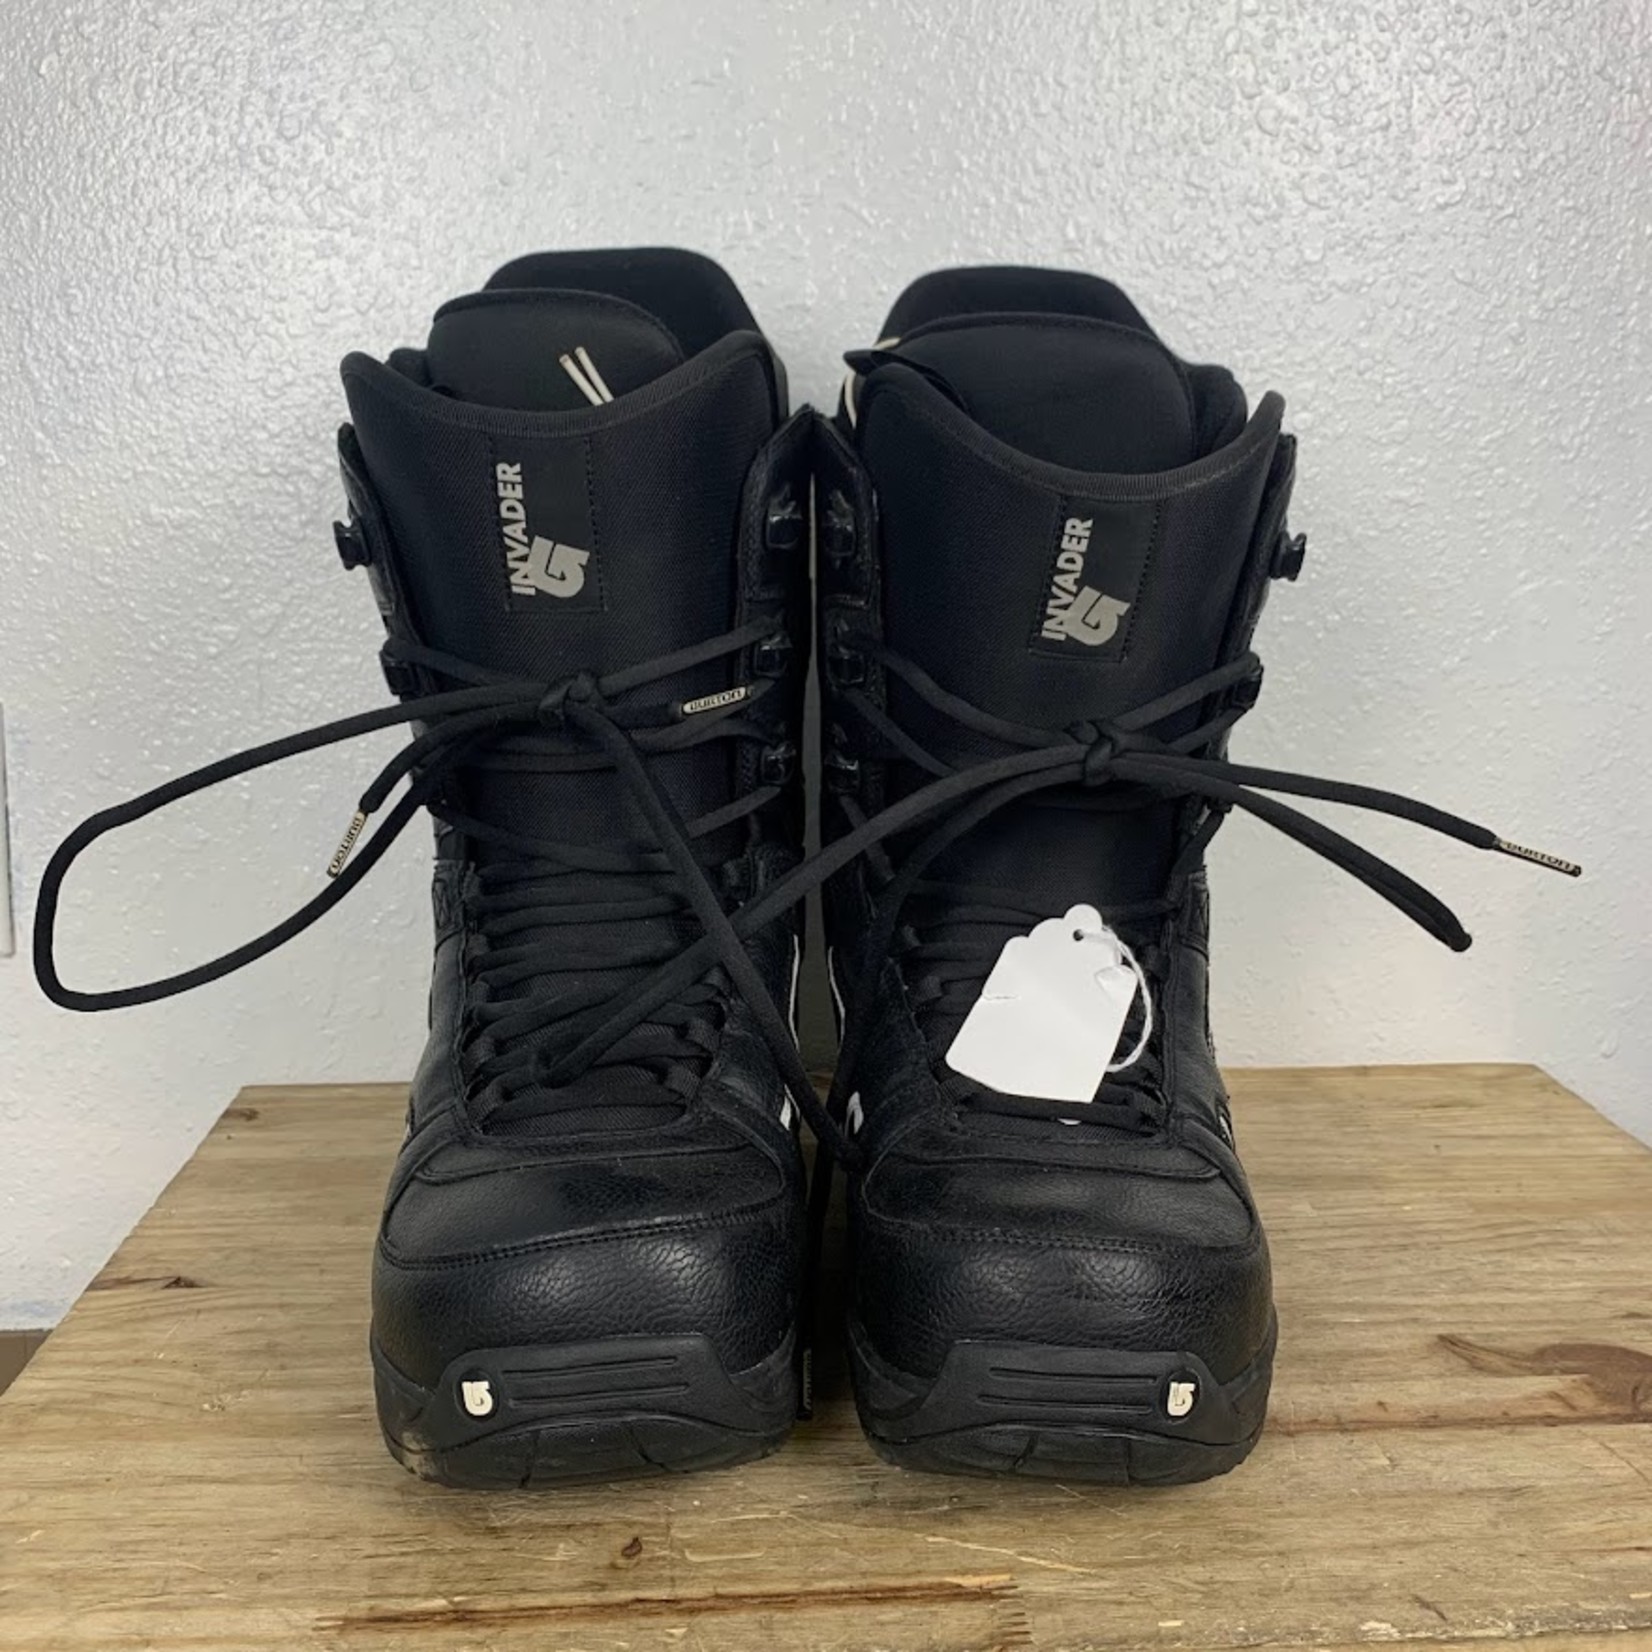 Burton Invader Snowboard Boots, Size 14 MENS